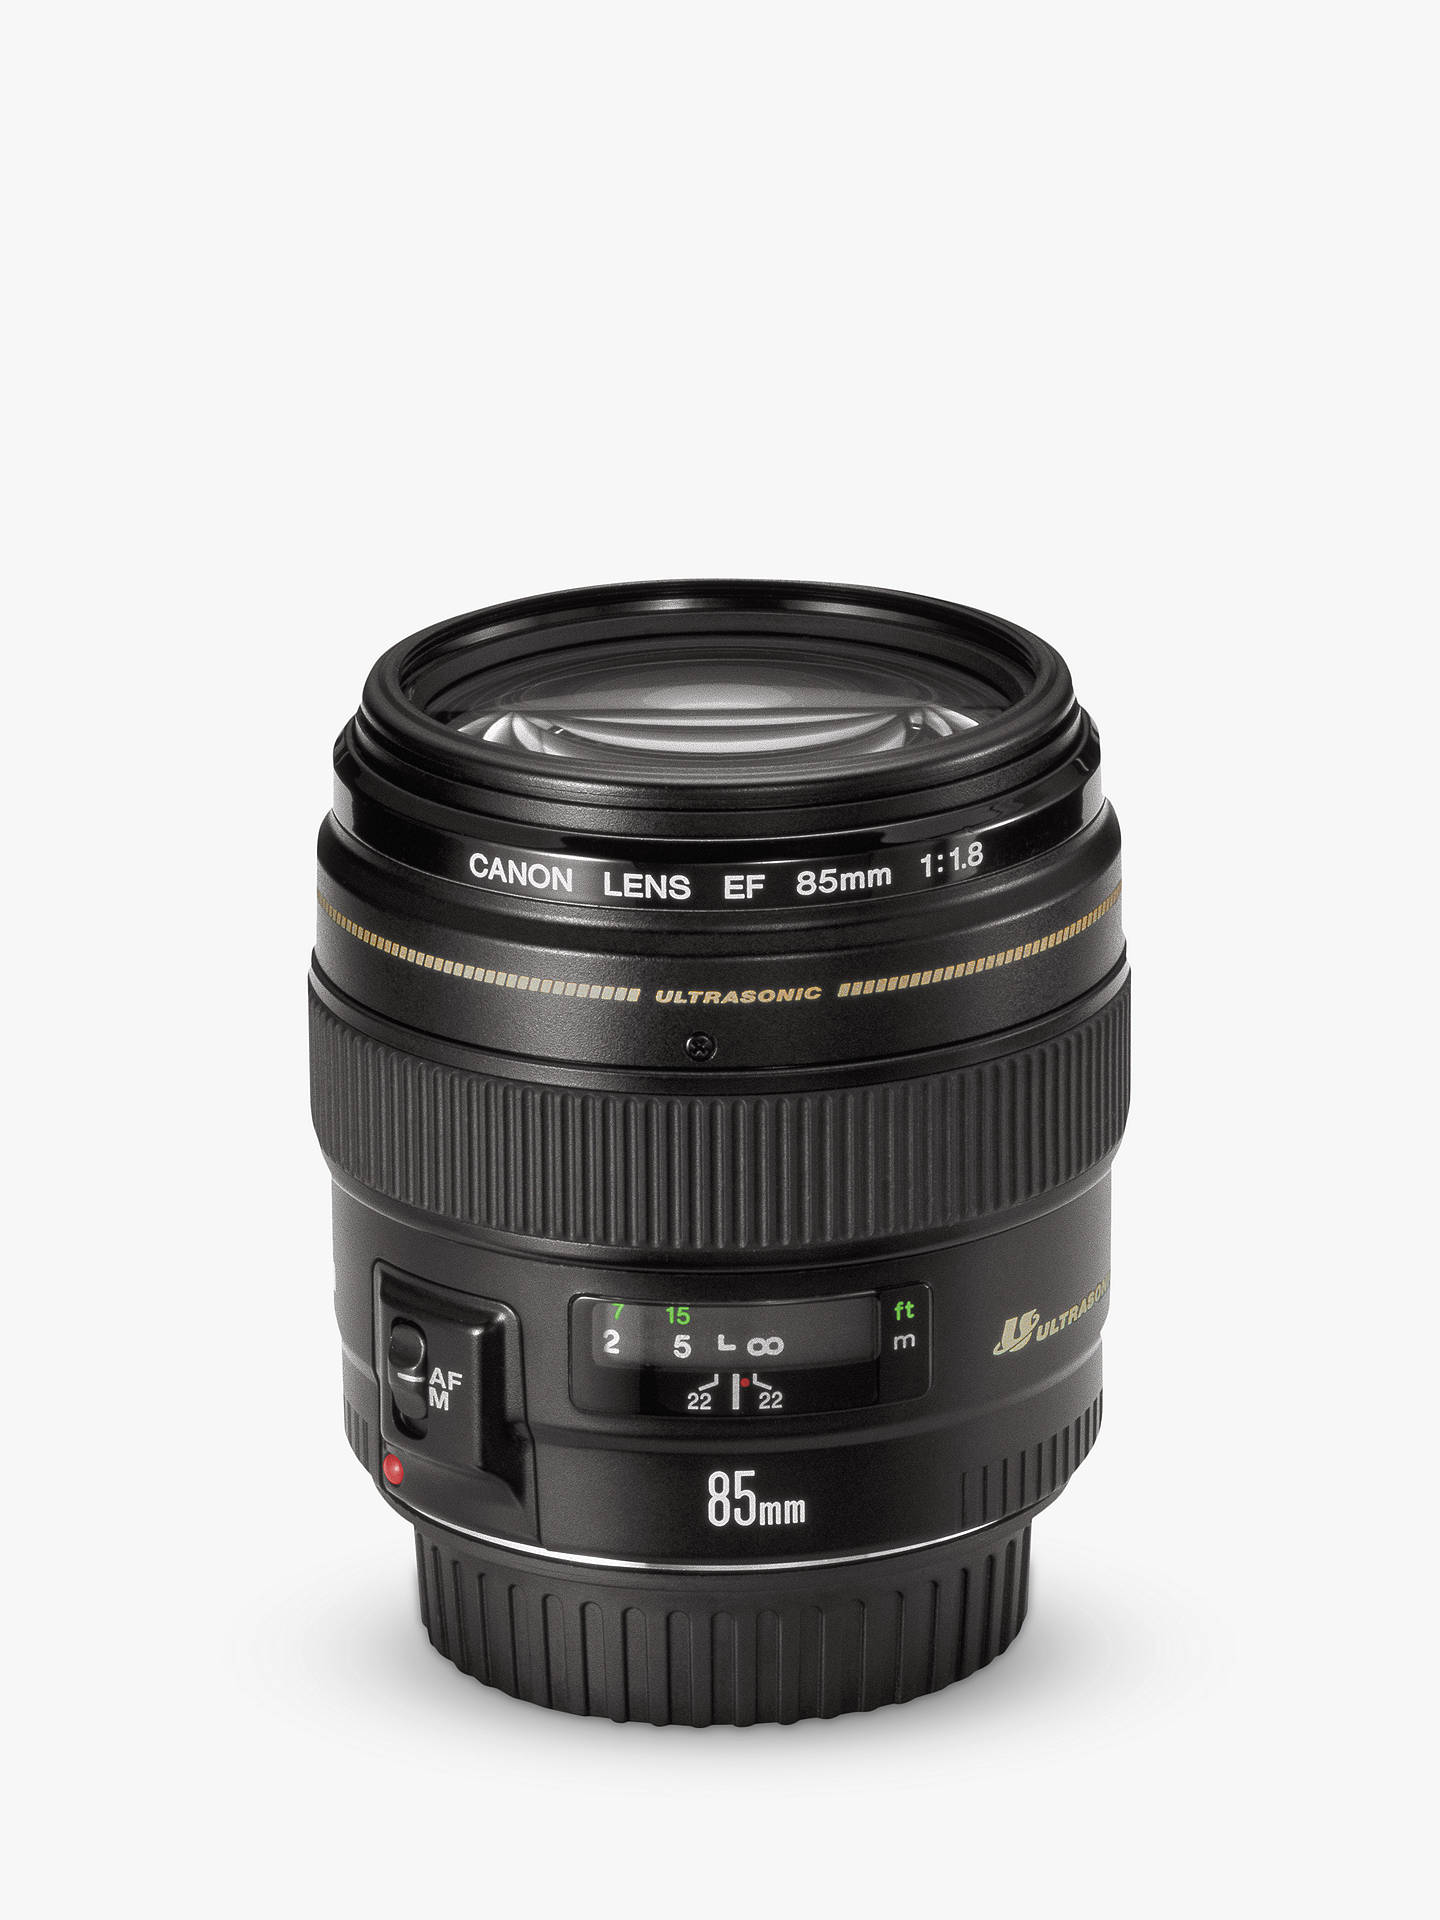 Canon EF 85mm f/1.8 USM Telephoto Lens at John Lewis & Partners